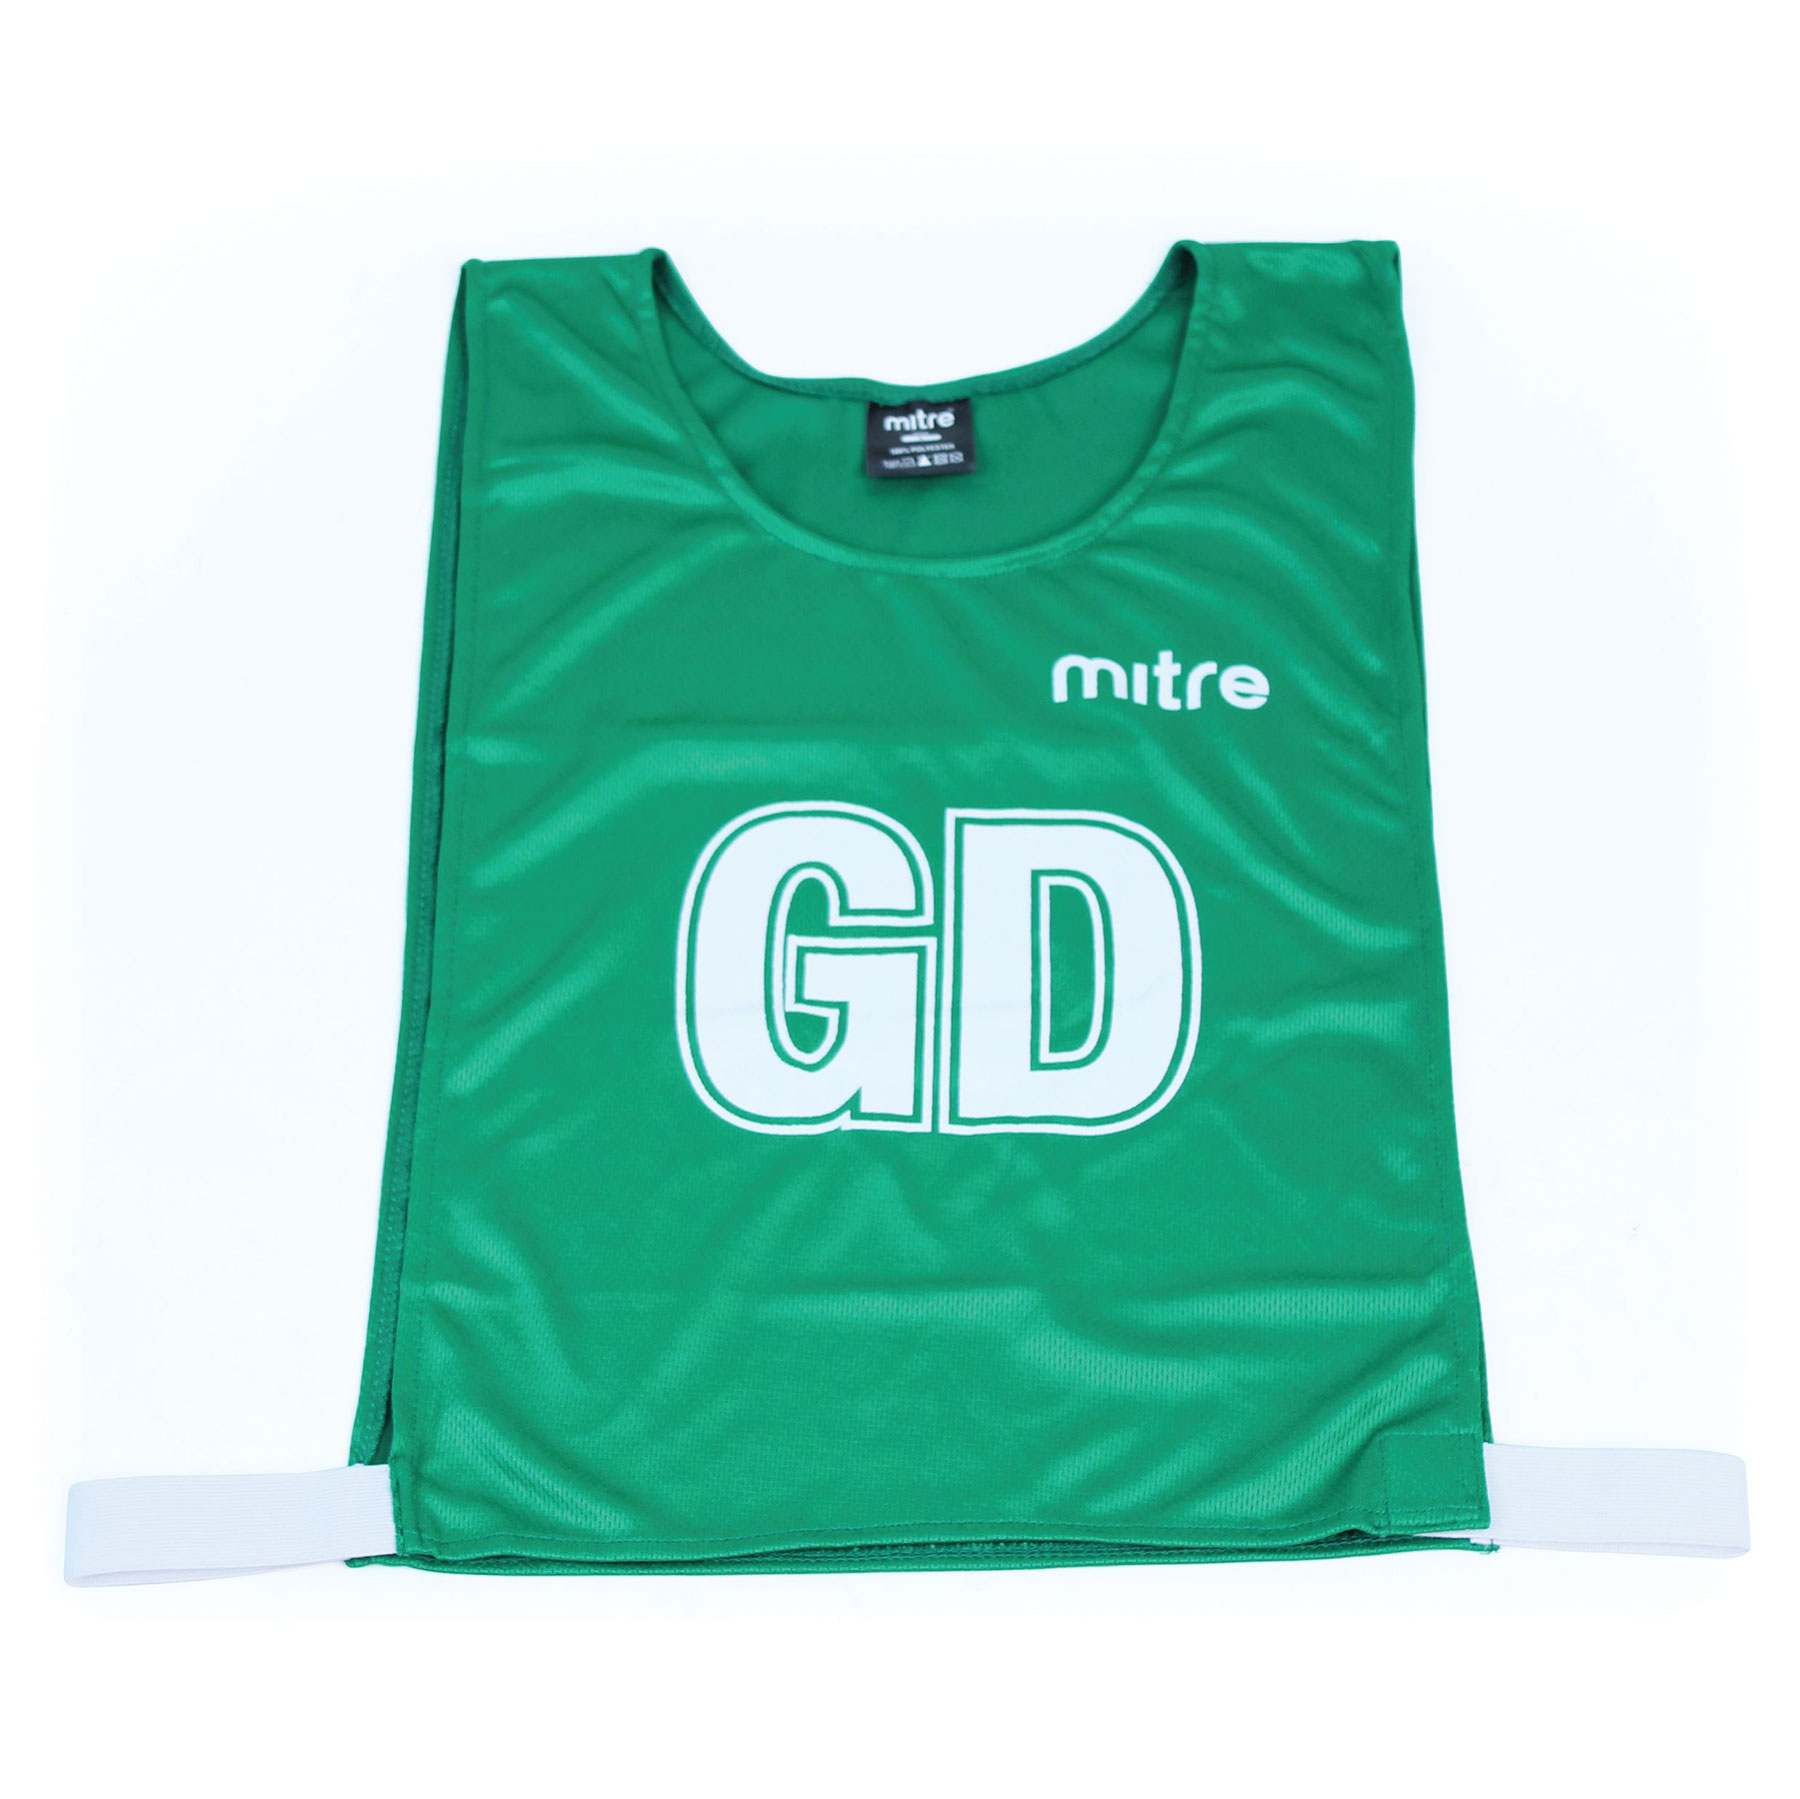 Mitre Pro Netball Bib Set - Emerald - Set Of 7